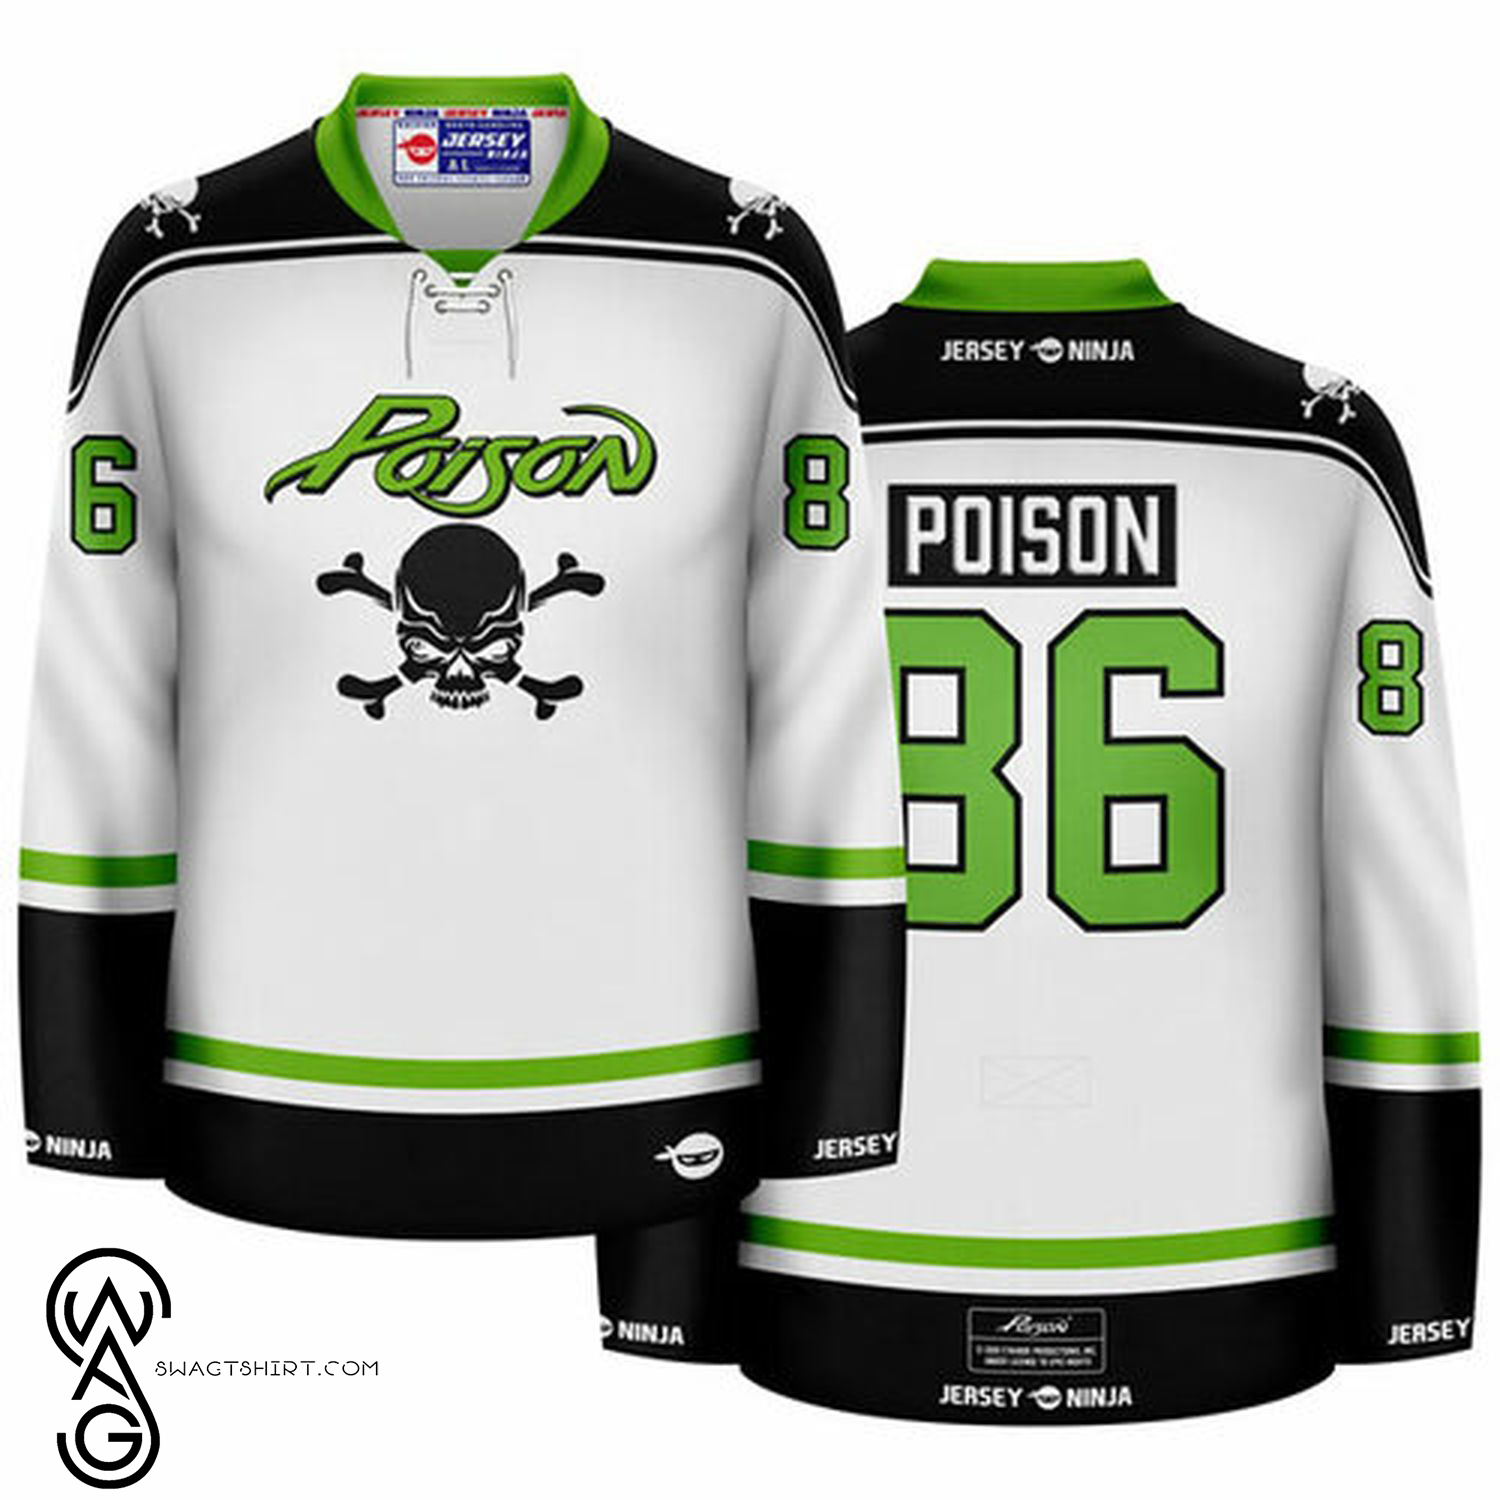 Poison Crossbones 3D Hockey Jersey